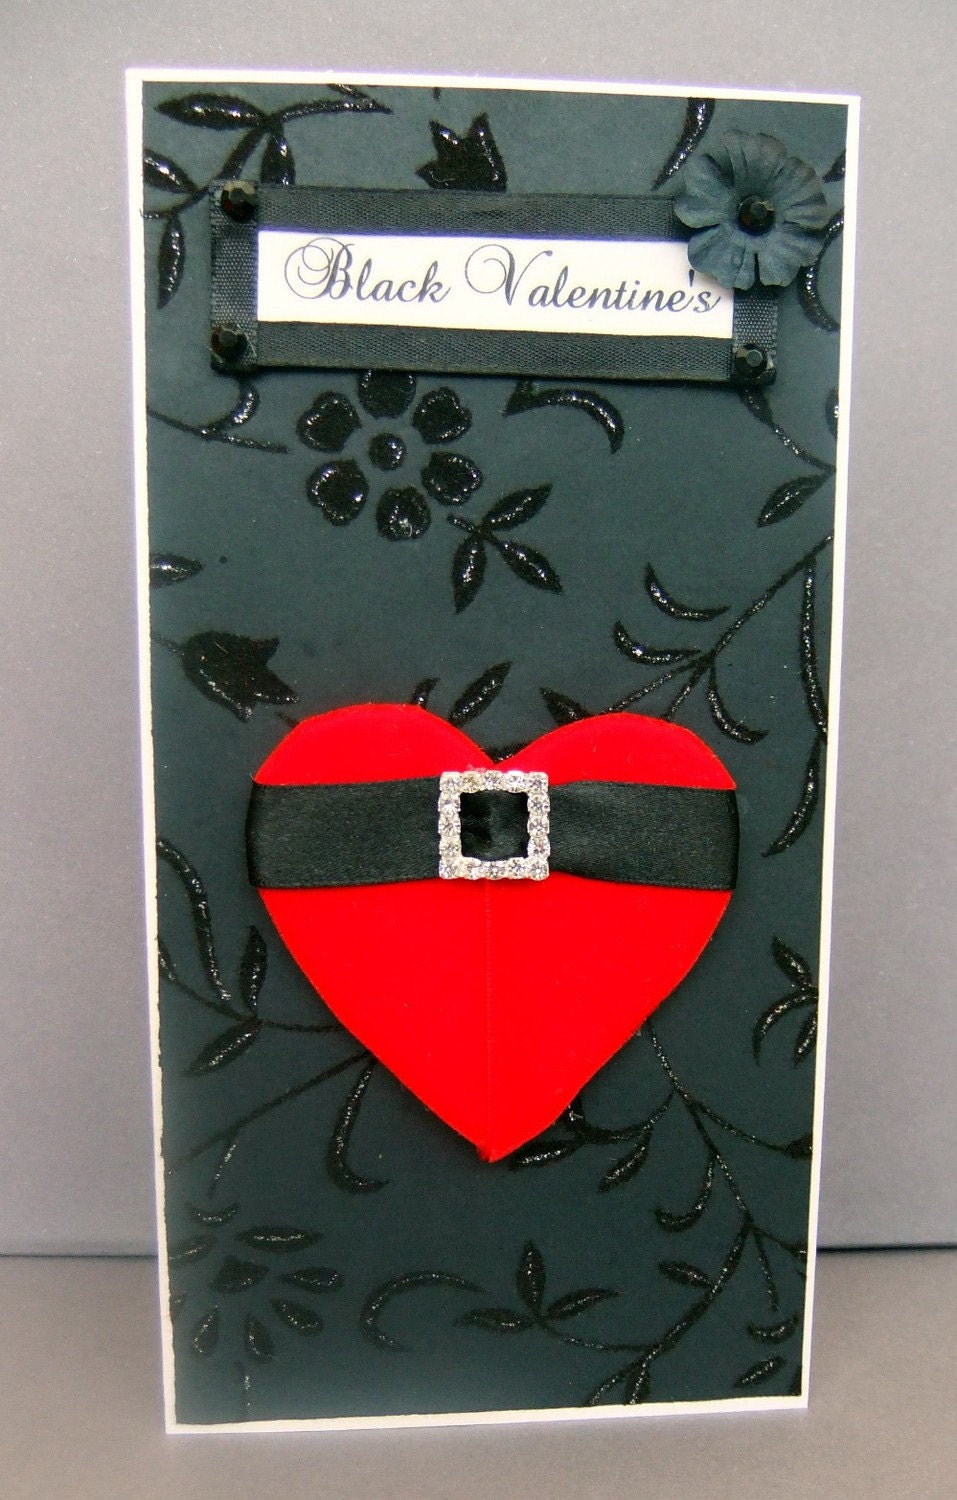 Black Valentine's Personalised Card / Handmade Greeting Card